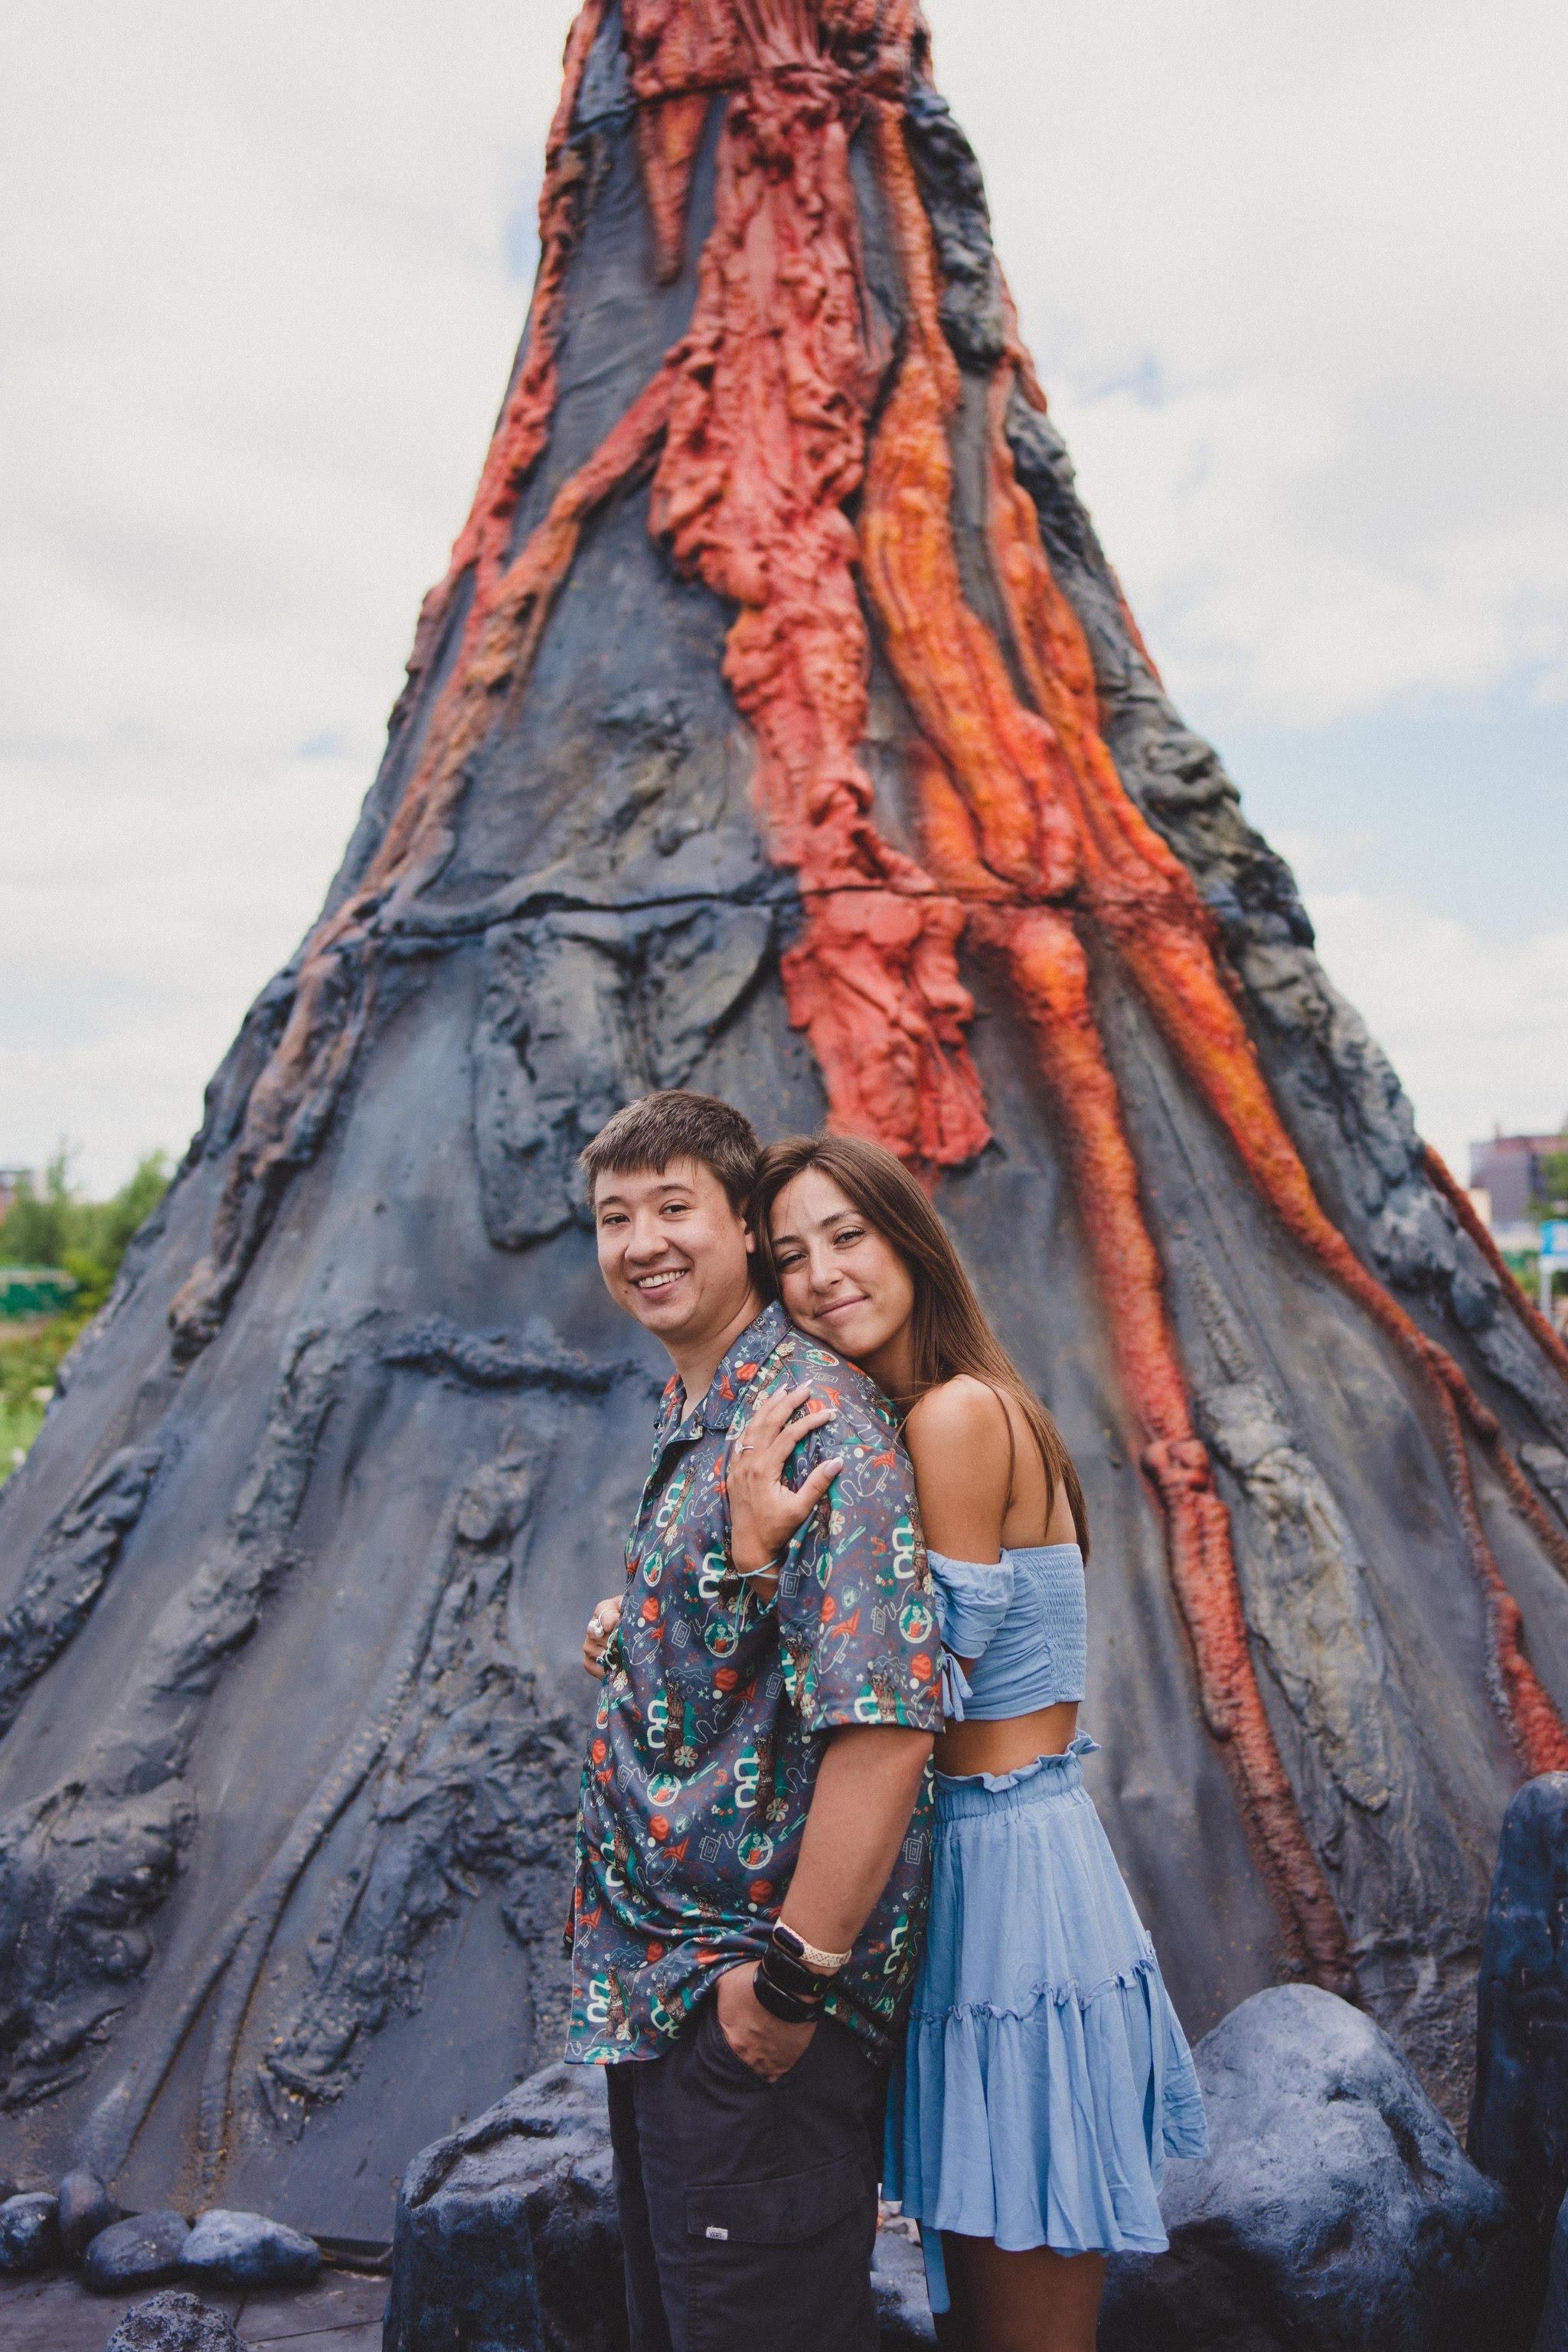 NYC GO Festの火山の写真撮影の前でポーズをとるブラッドとケルシ。